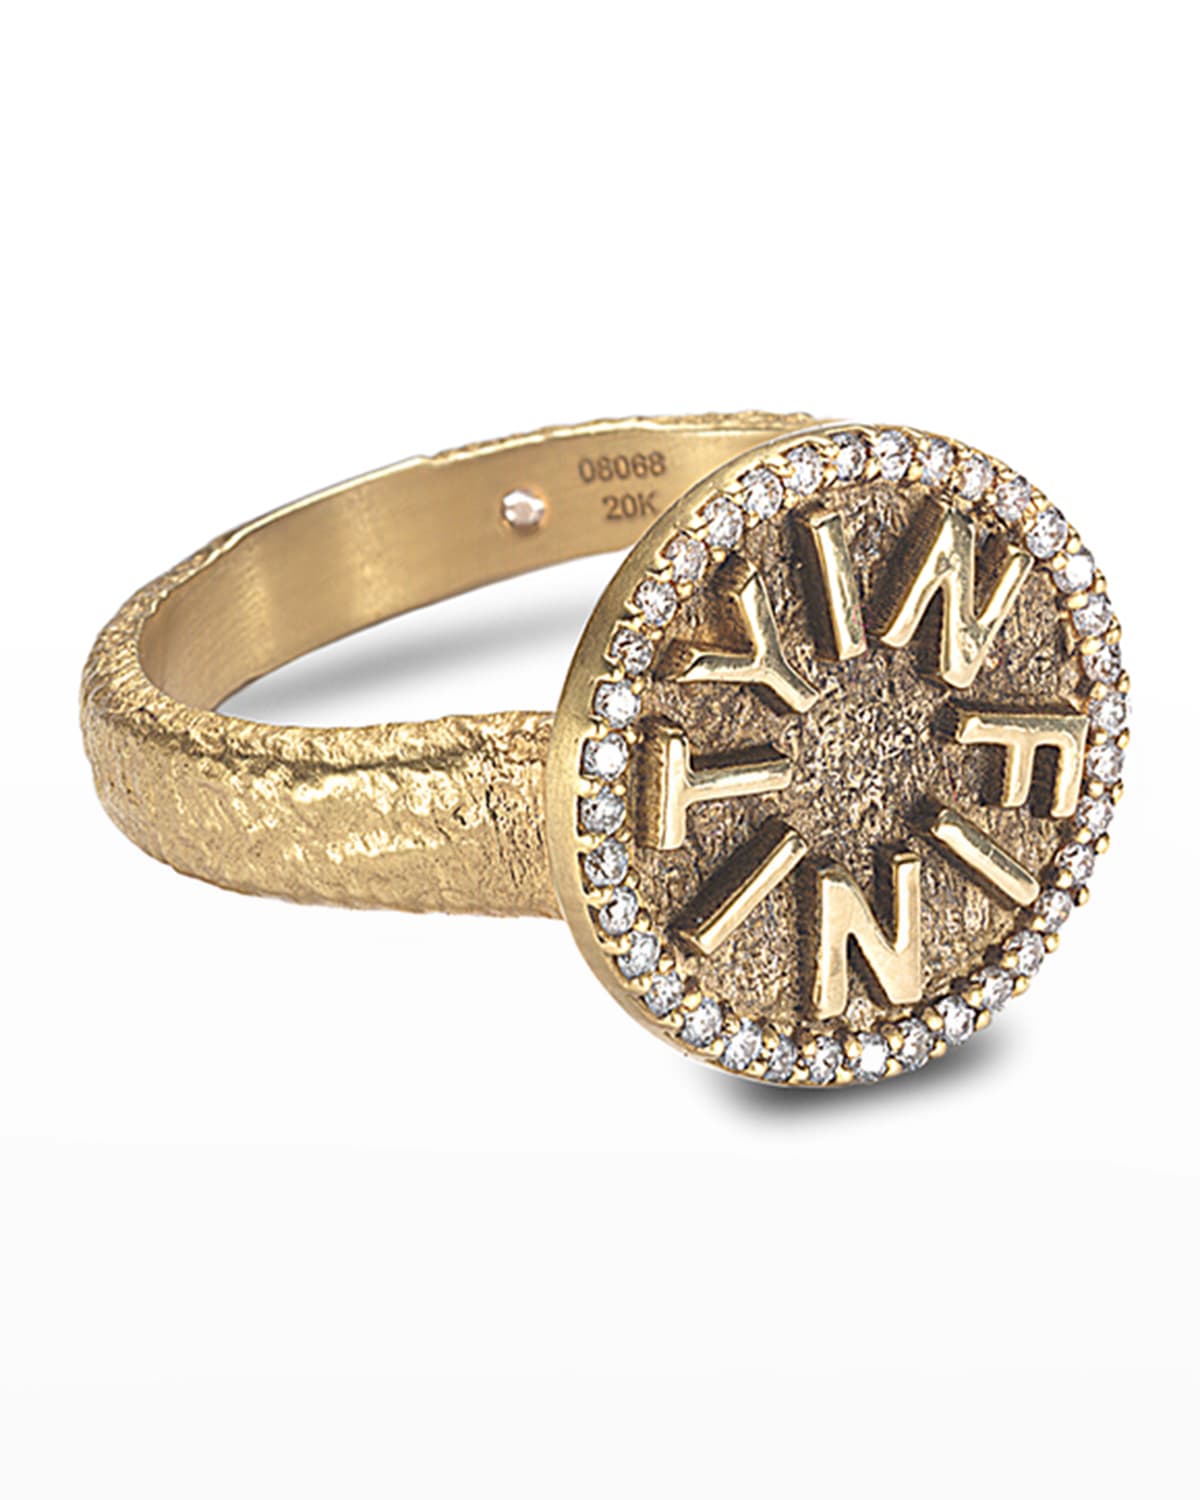 COOMI Sagrada 20k Infinity Diamond Ring, Size 8